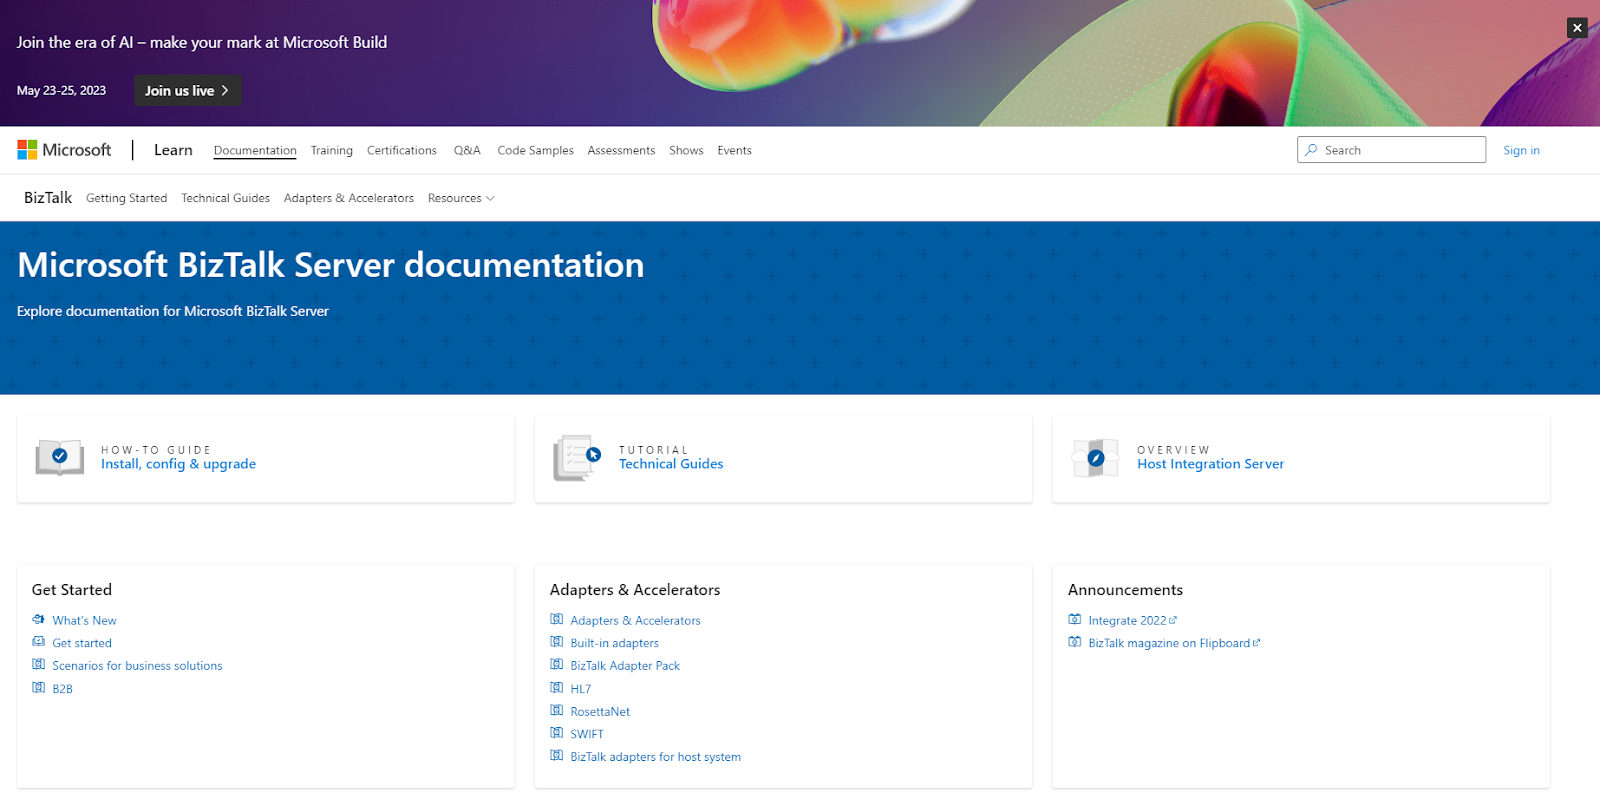 Microsoft BizTalk Server documentation page